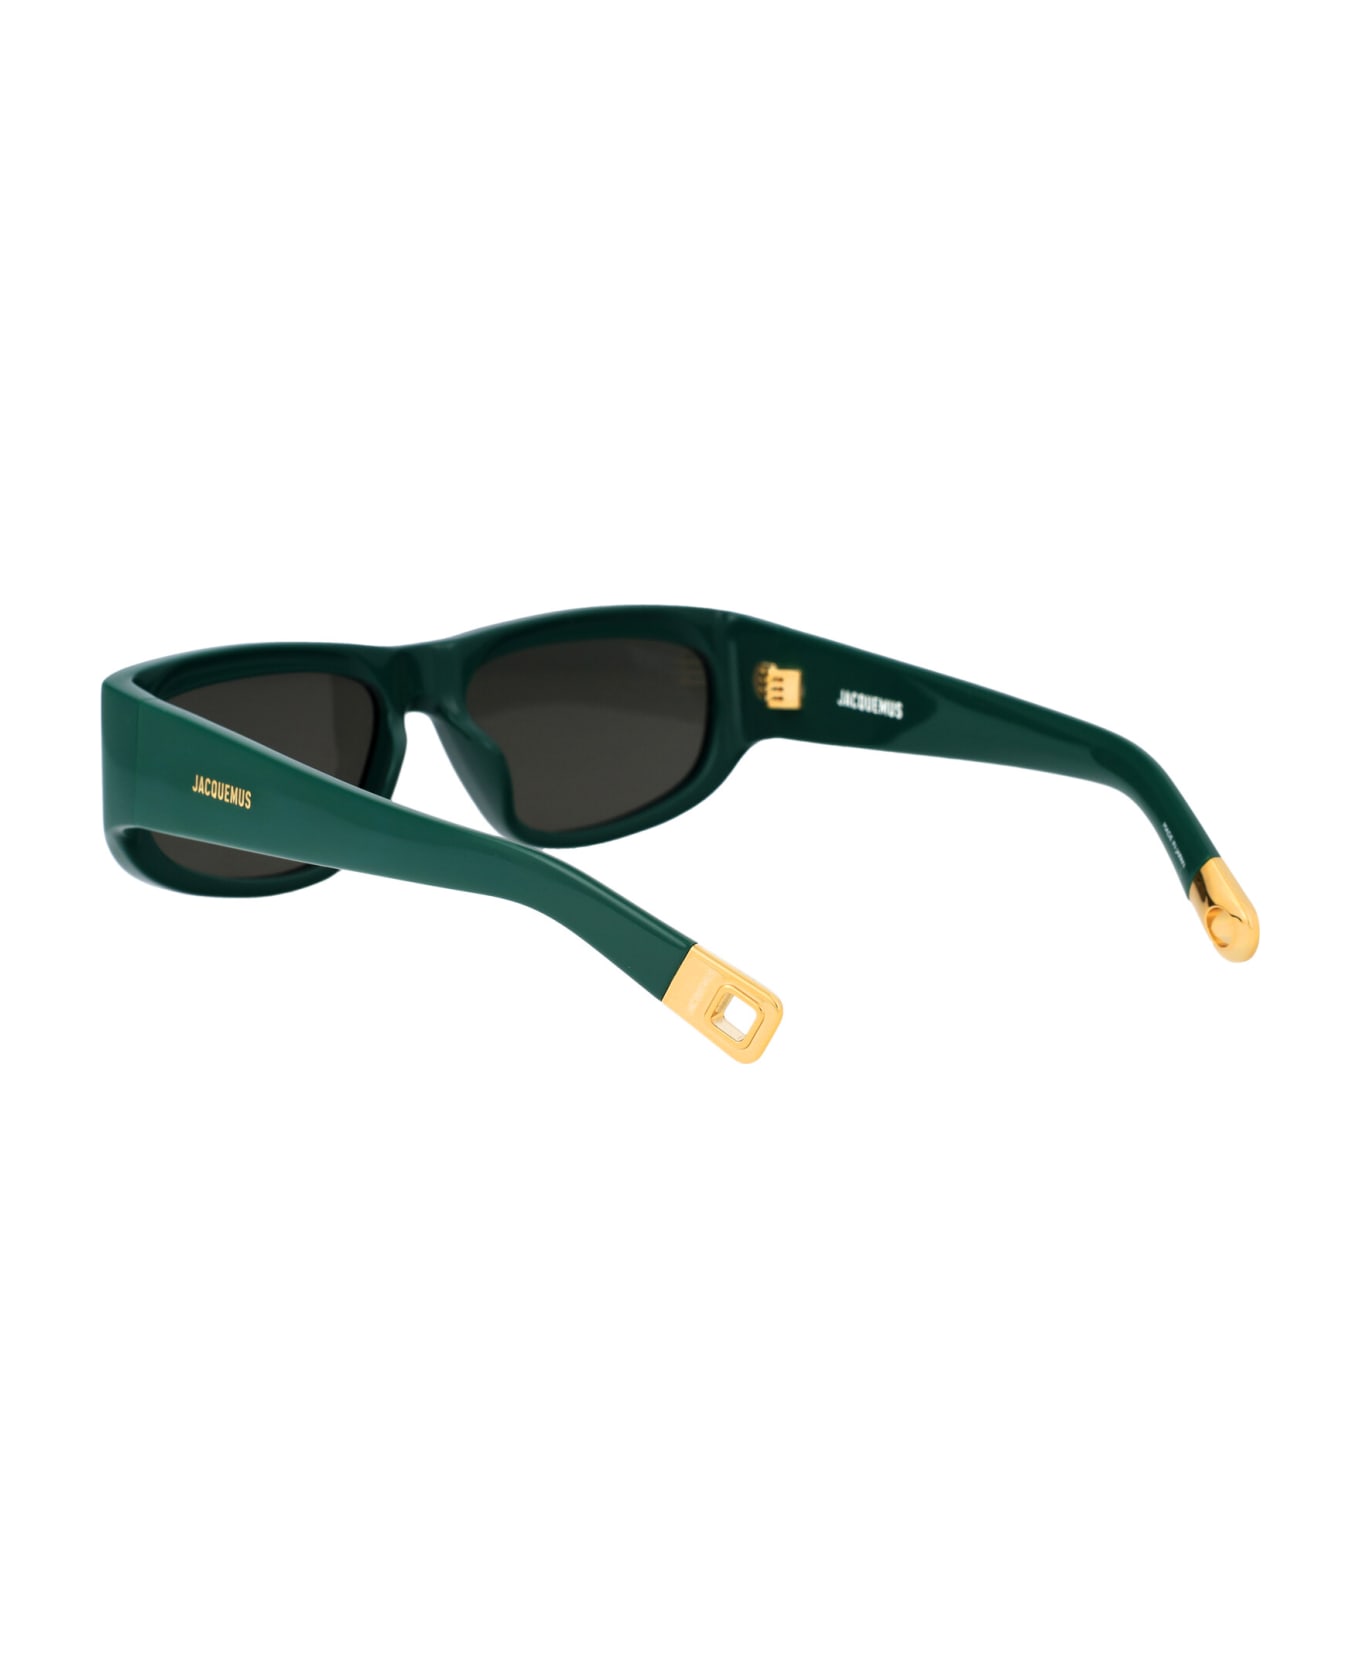 Jacquemus Pilota Sunglasses - 03 GREEN/ YELLOW GOLD/ GREY サングラス